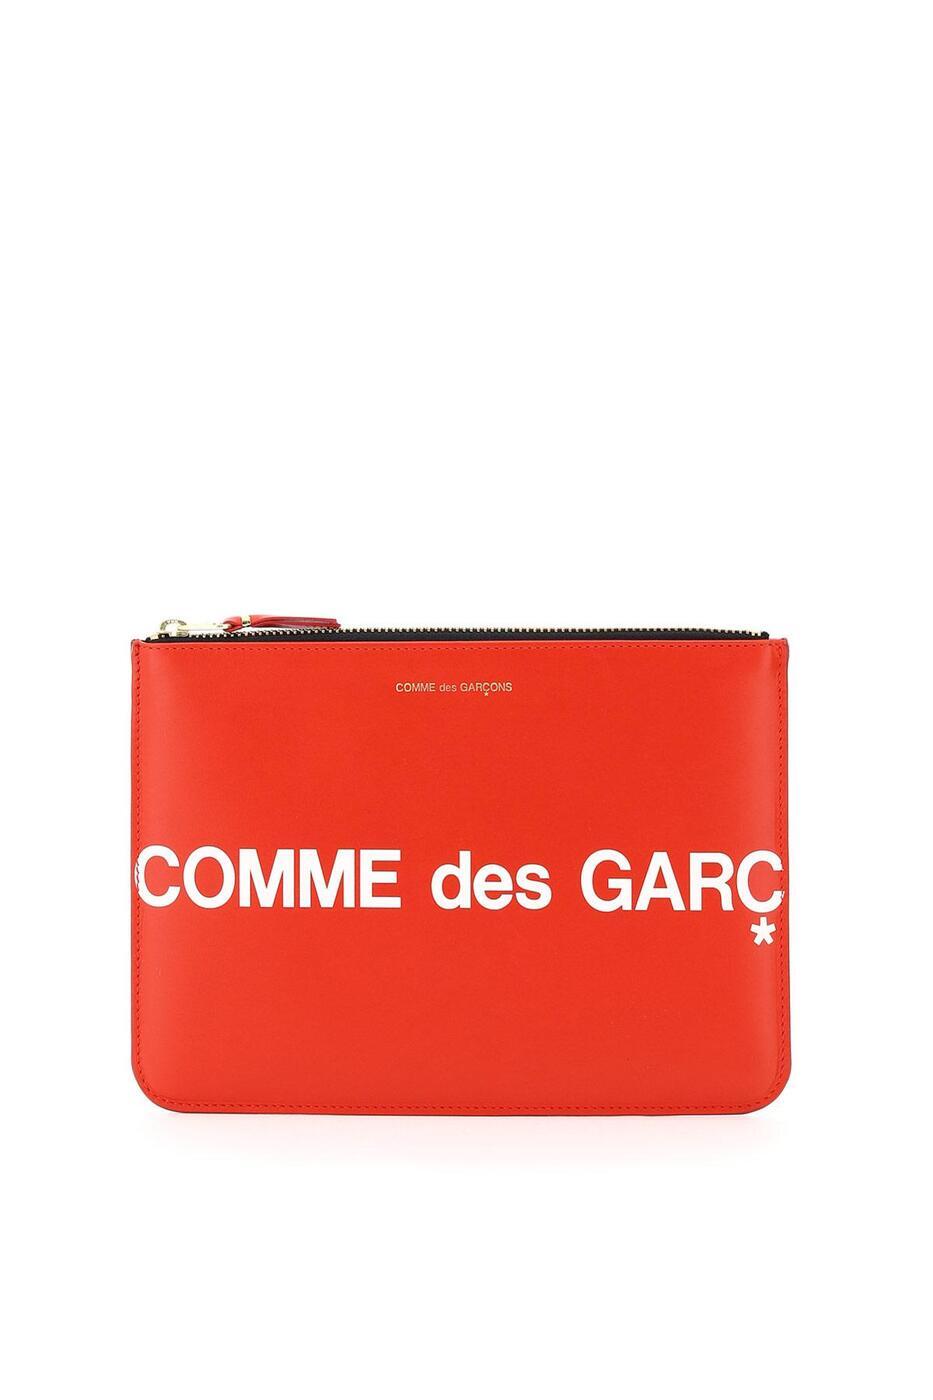 COMME DES GARCONS コム デ ギャルソン レッド Red ファッション小物 メンズ 7981617447061 【関税・送料無料】【ラッピング無料】 ba